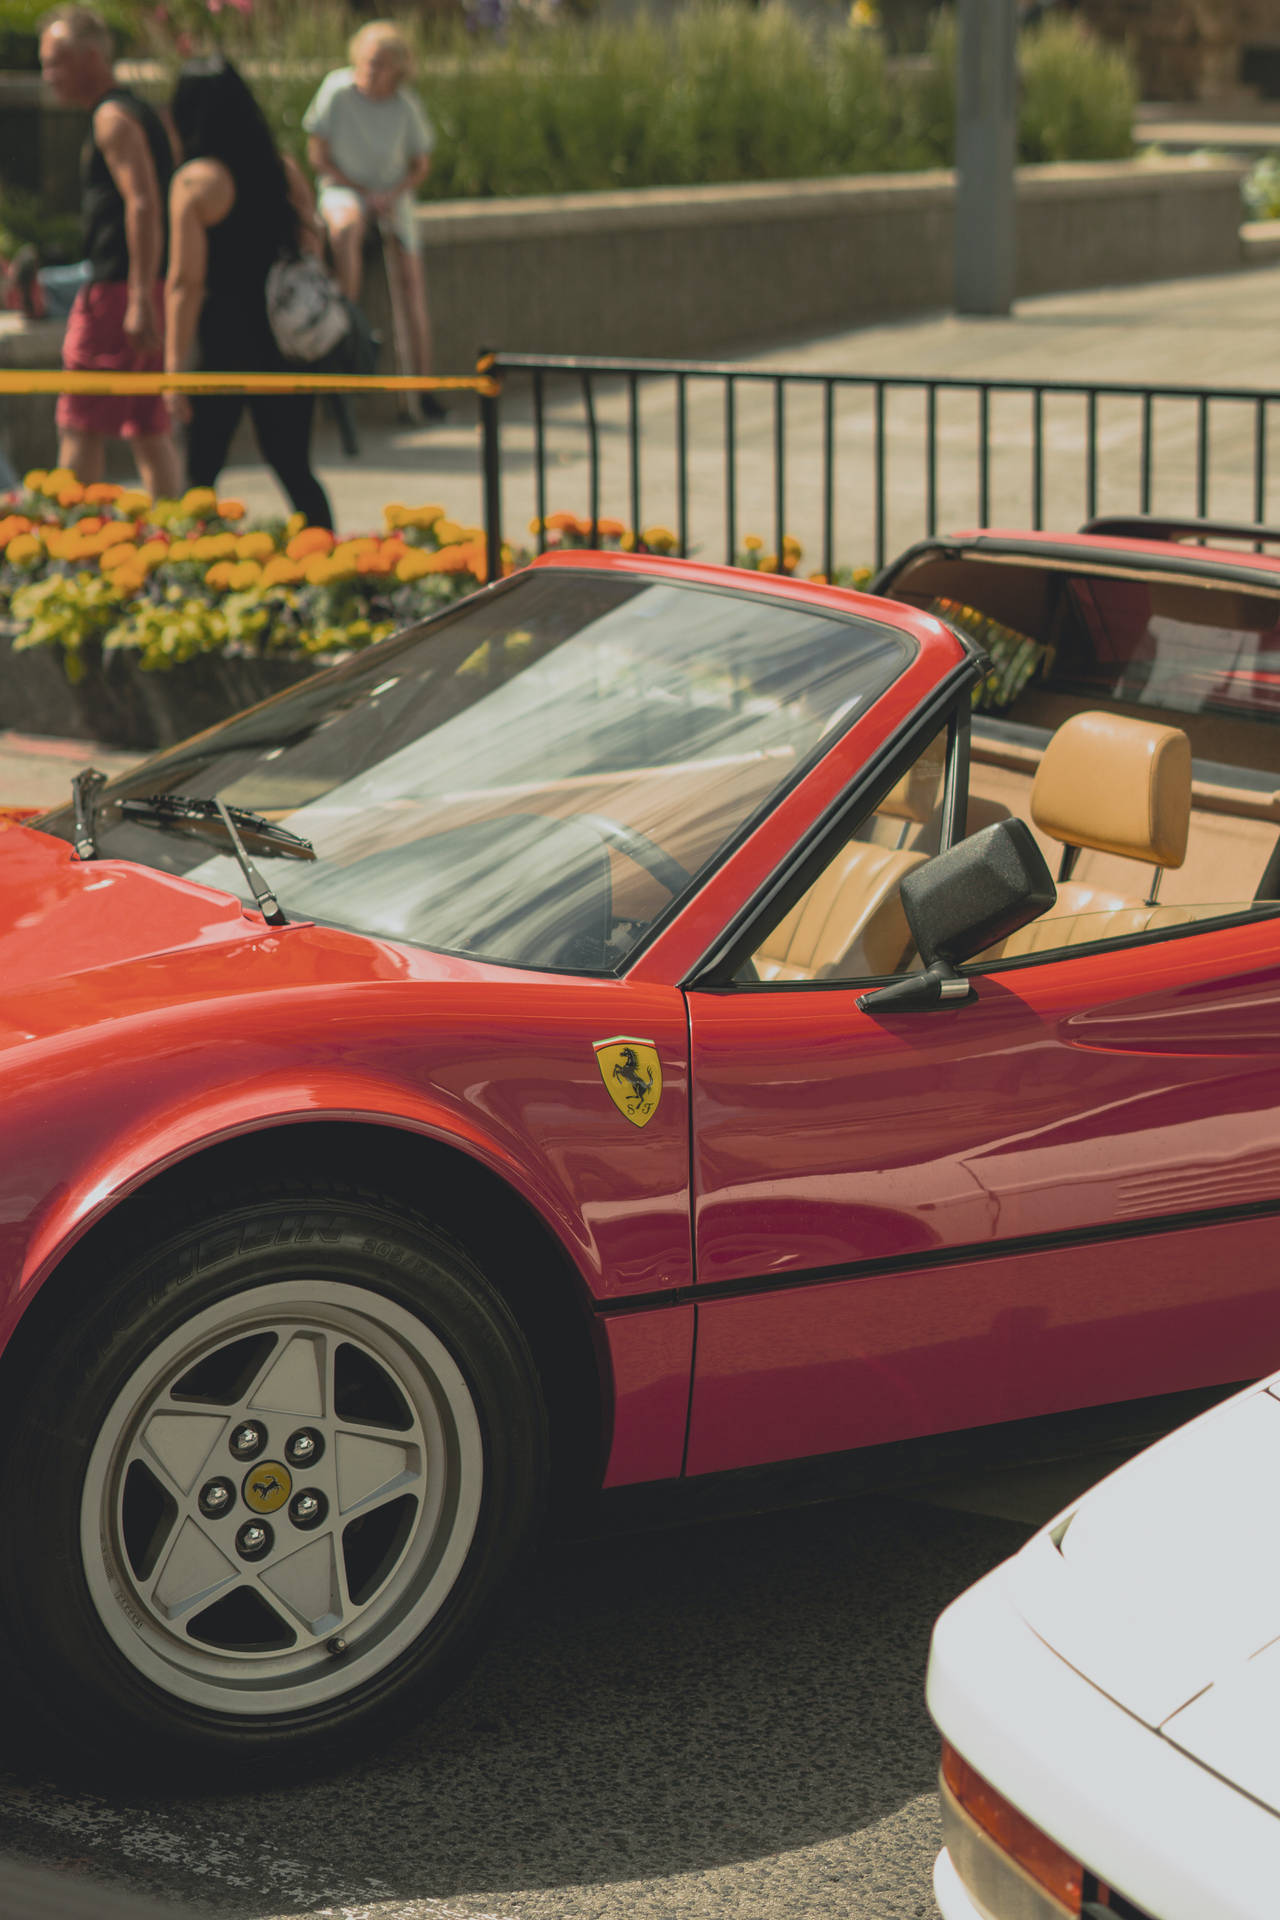 Caption: Stunning Ferrari Showcasing The Vivid Clarity Of The Iphone 11 Pro Max 4k Resolution. Background